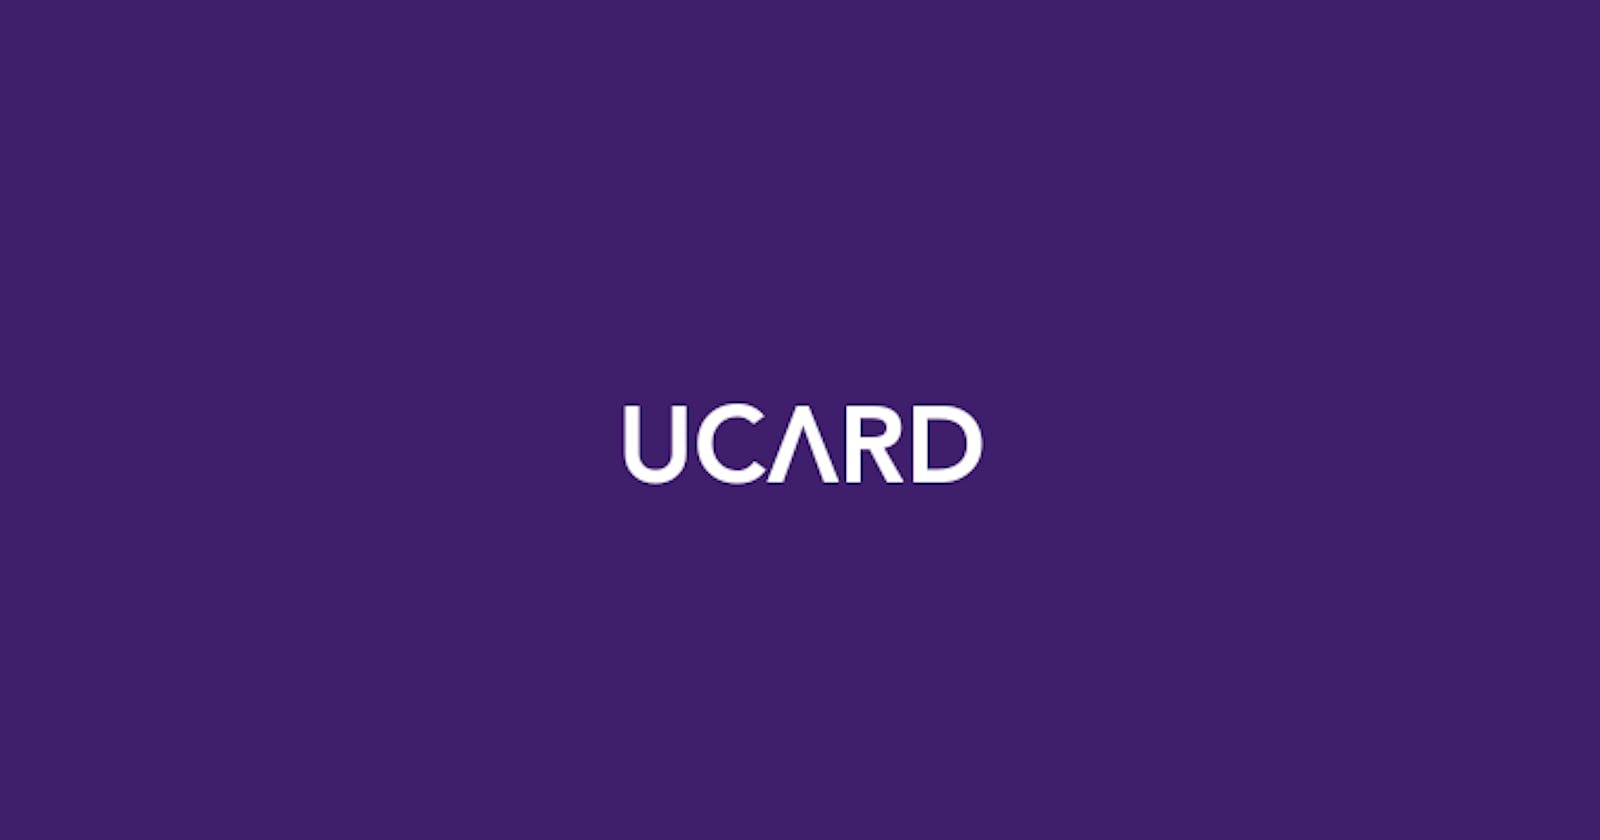 UCARD Product Teardown